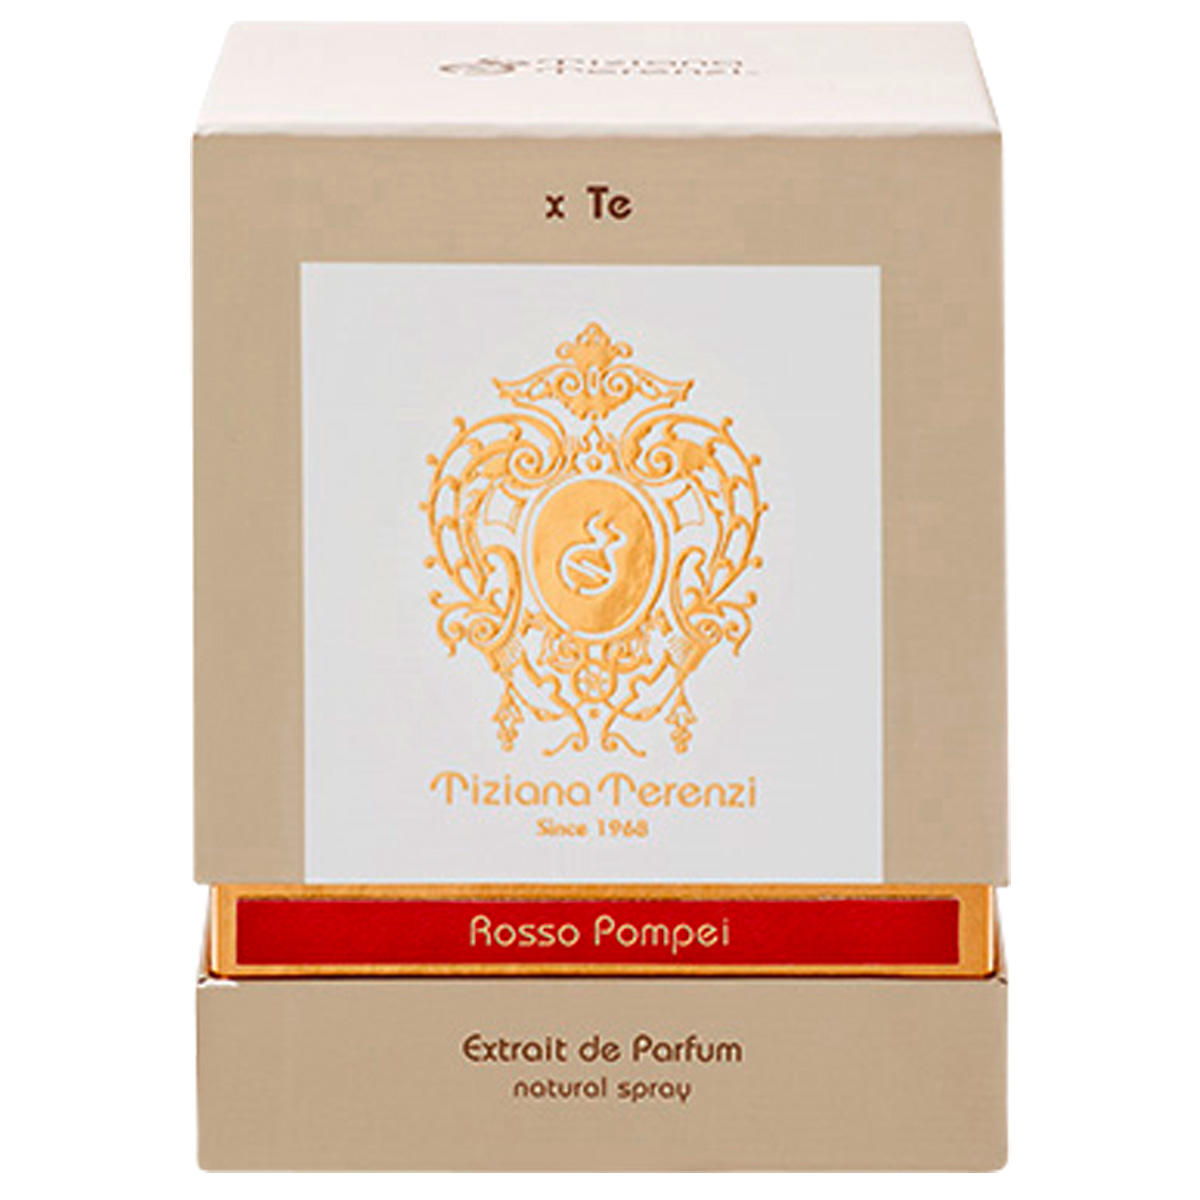 Tiziana Terenzi Rosso Pompei Extrait de Parfum 100 ml - 2